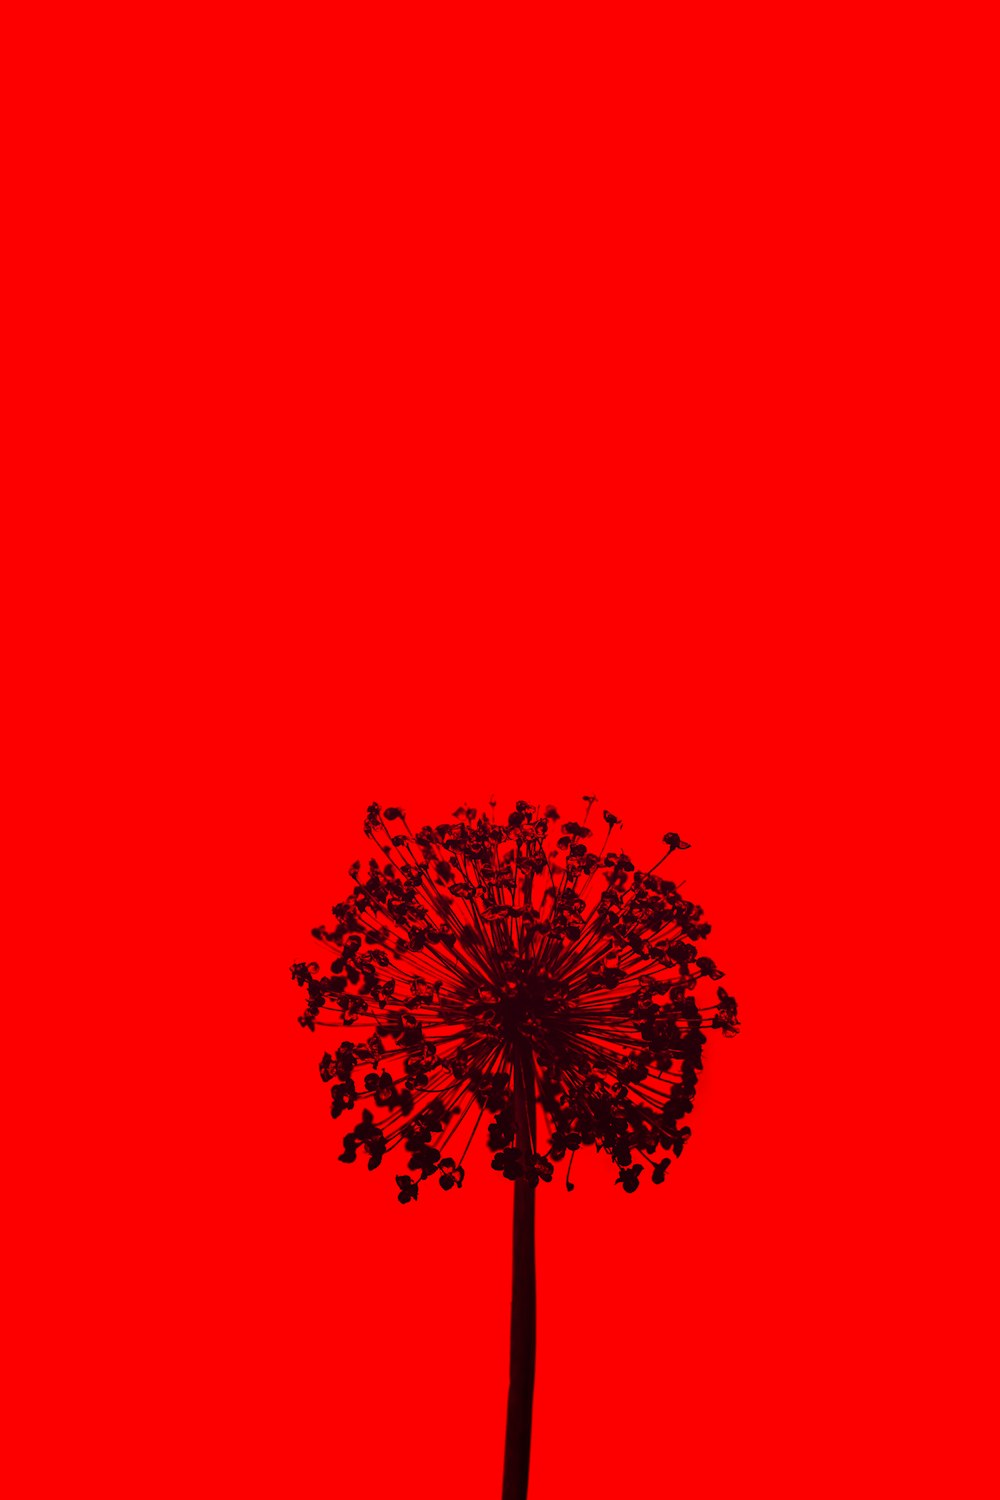 red and black tree illustration